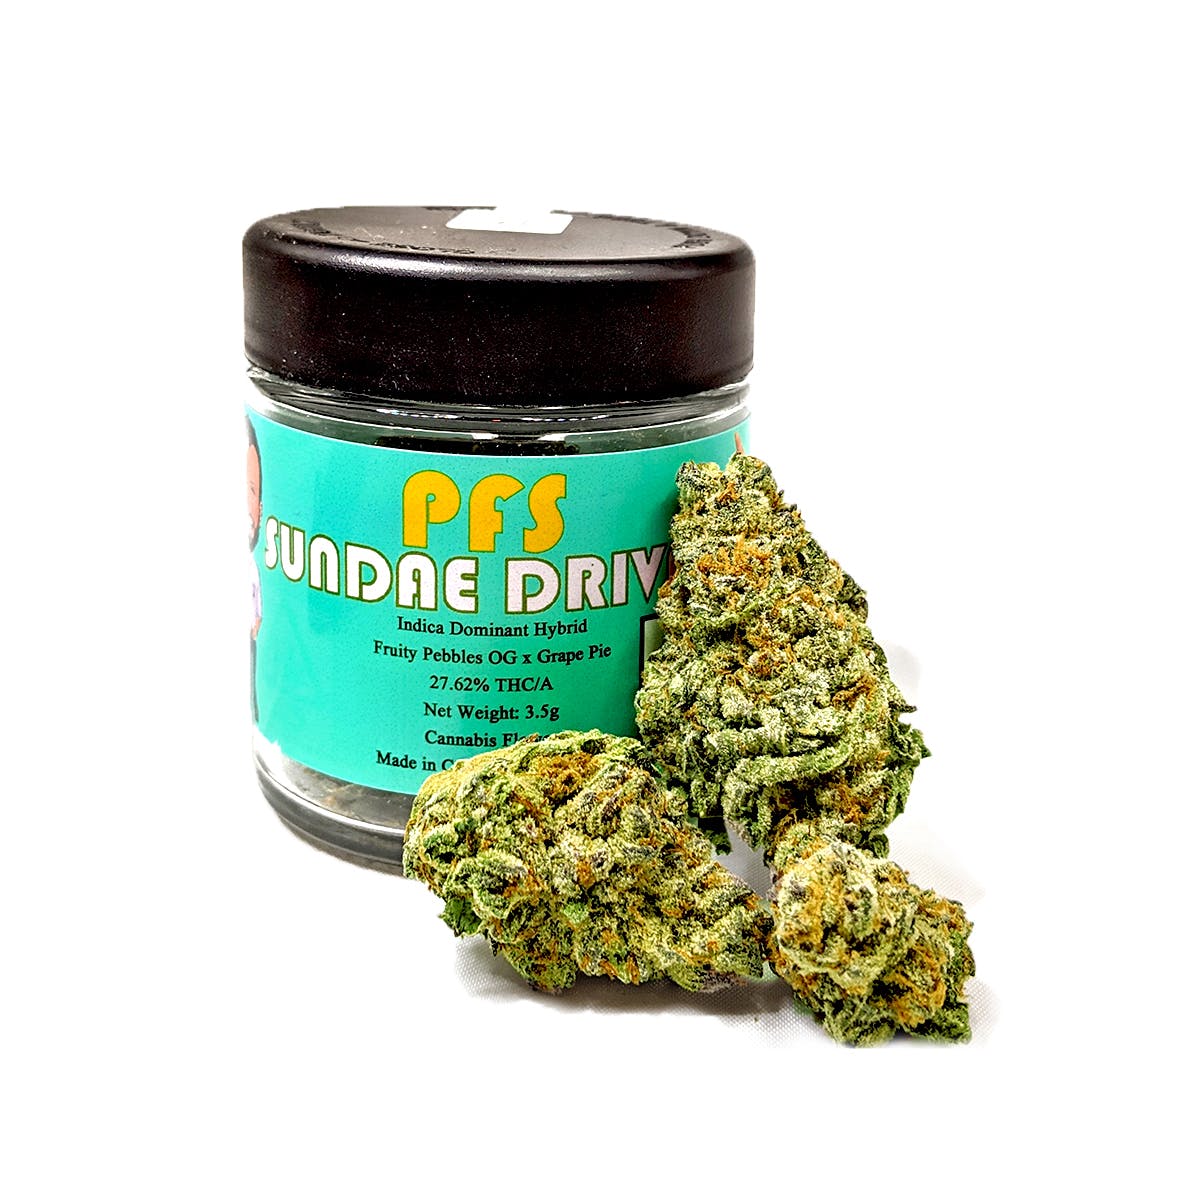 marijuana-dispensaries-the-kind-center-2c-inc-in-hollywood-sundae-driver-preroll